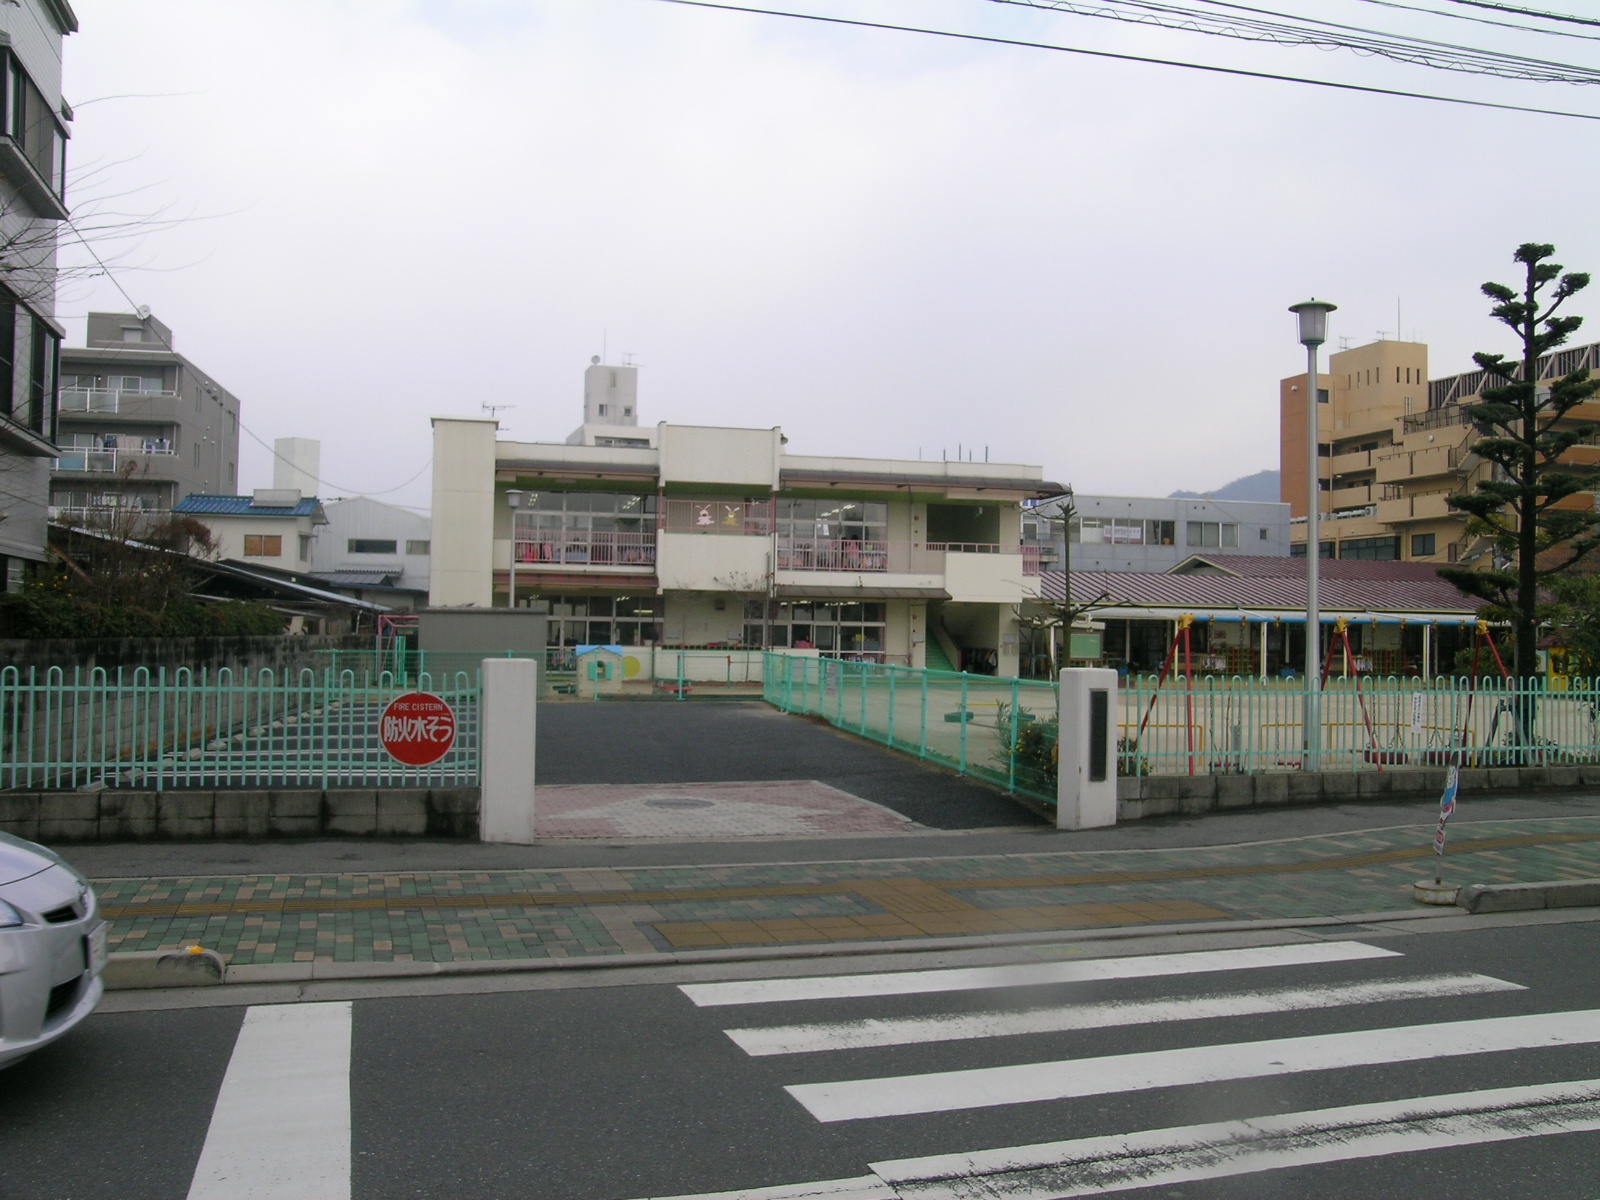 kindergarten ・ Nursery. Suzuho Gardens nursery school (kindergarten ・ 422m to the nursery)